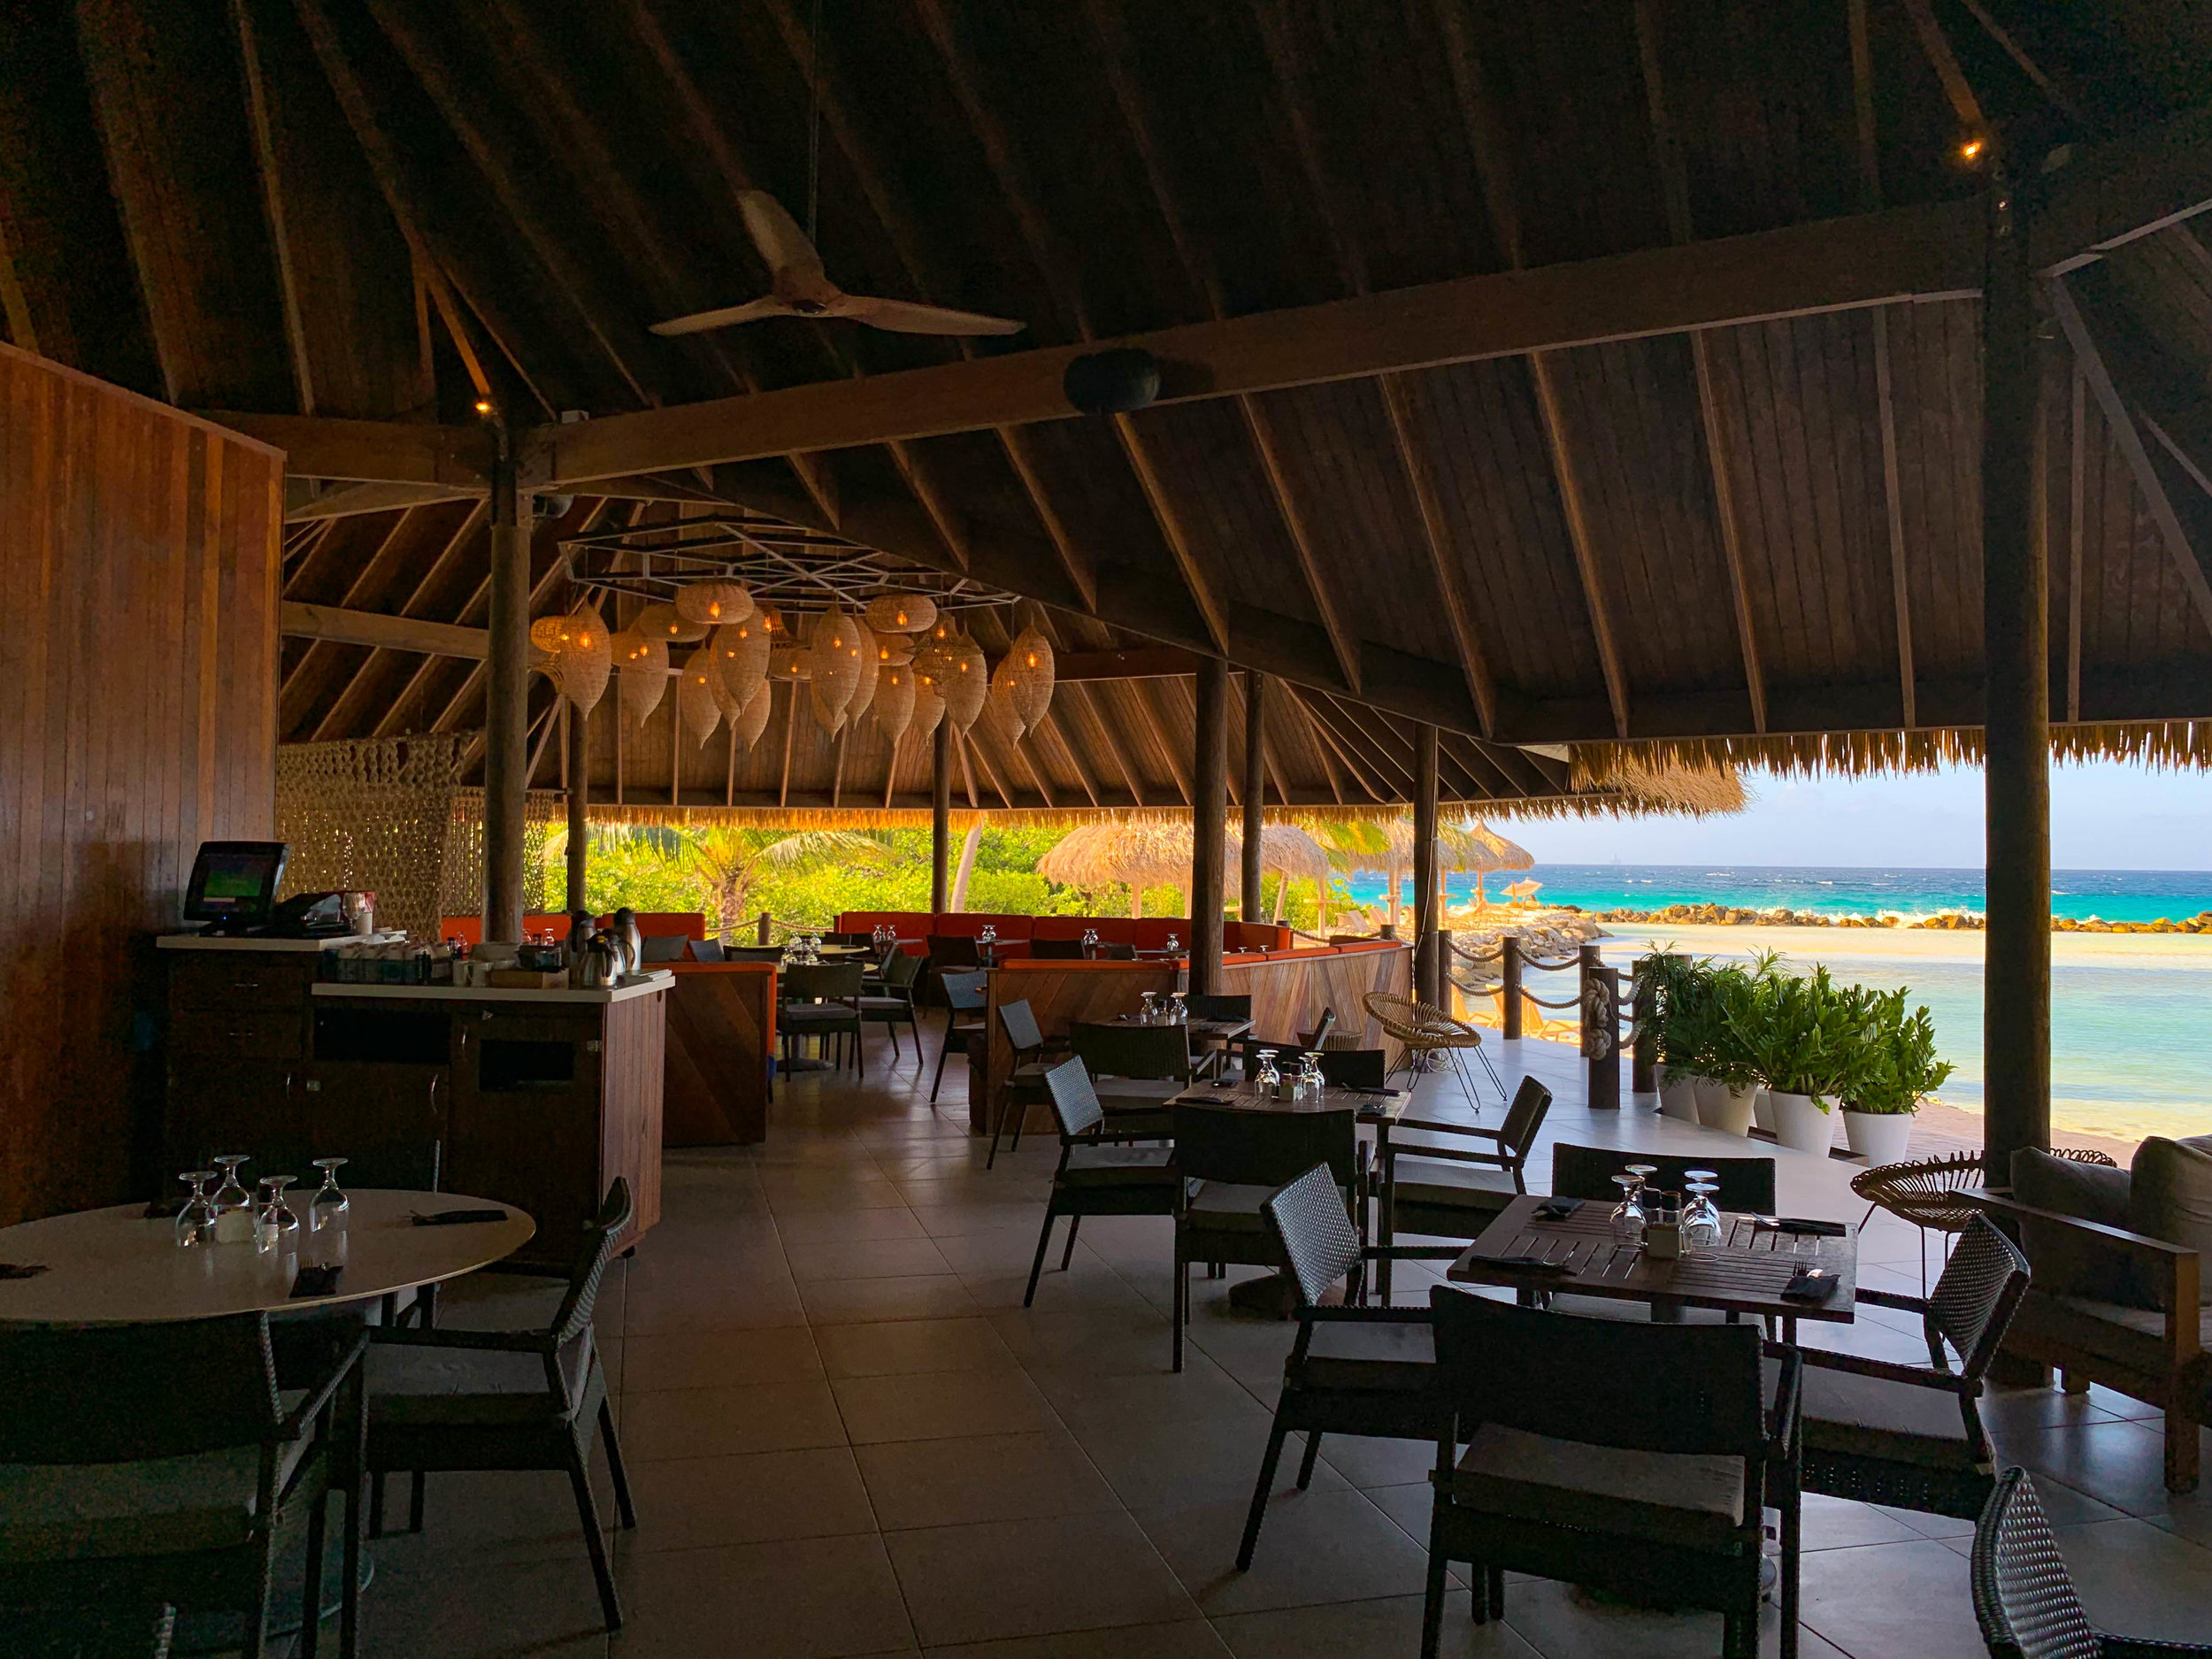 Iguana Beach Renaissance Island Restaurant